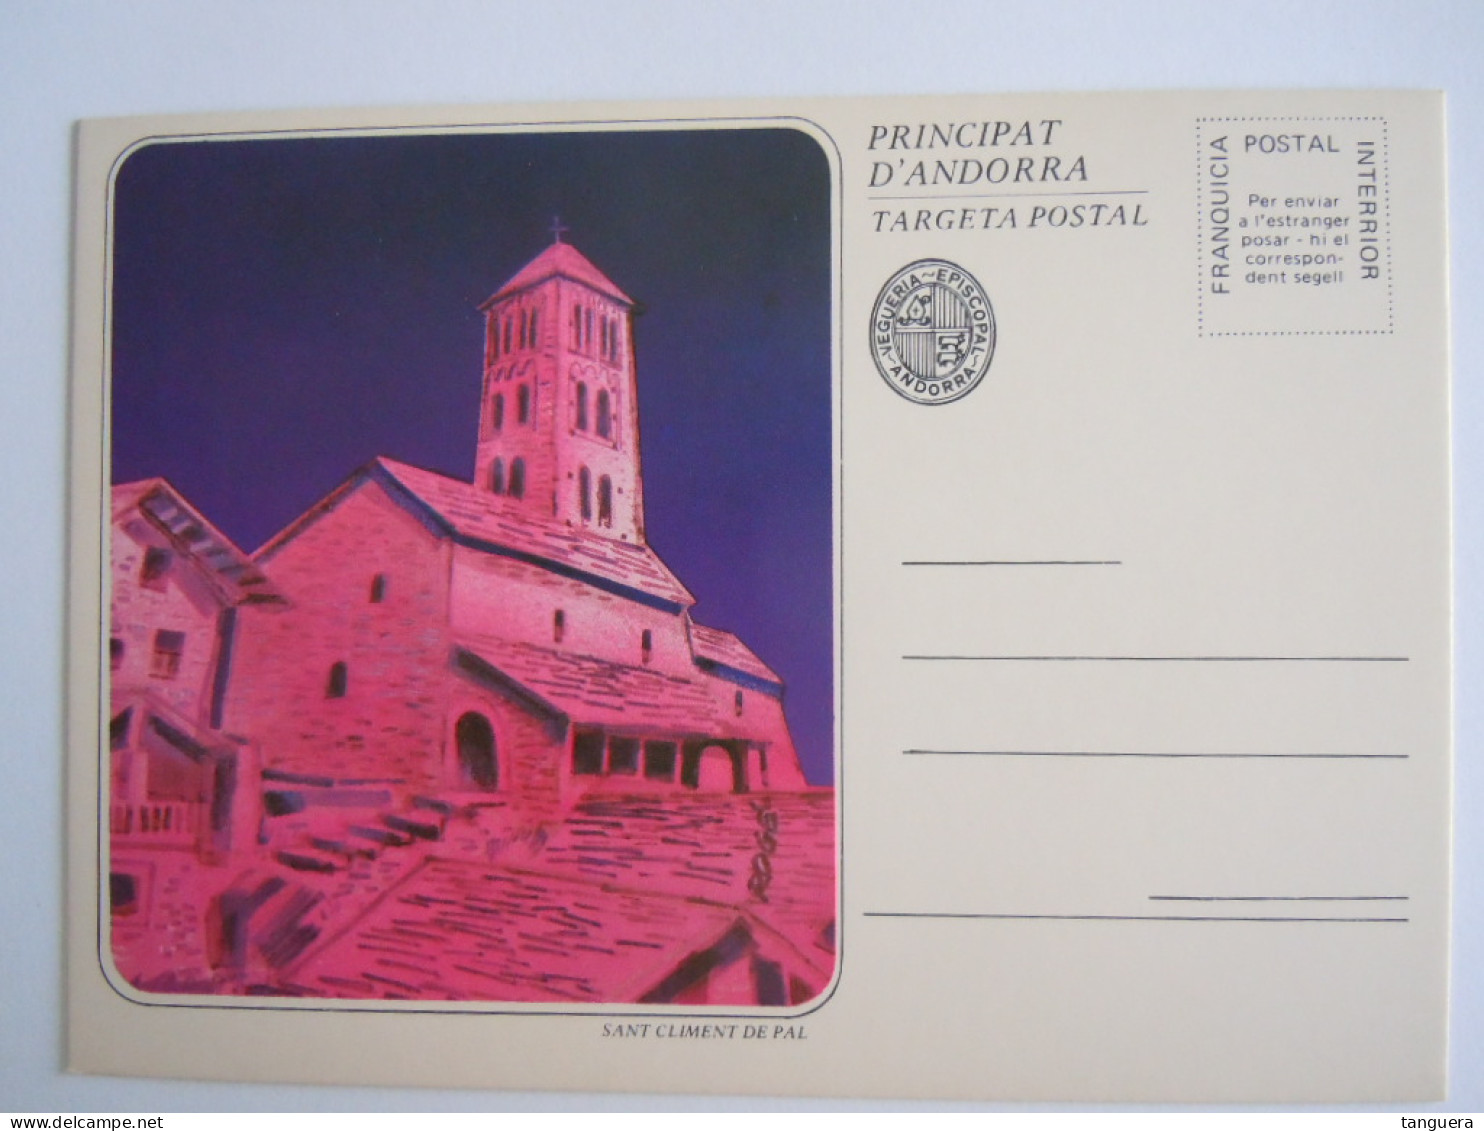 Principat d'Andorra serie 6 targeta postal entier stationery églises churches